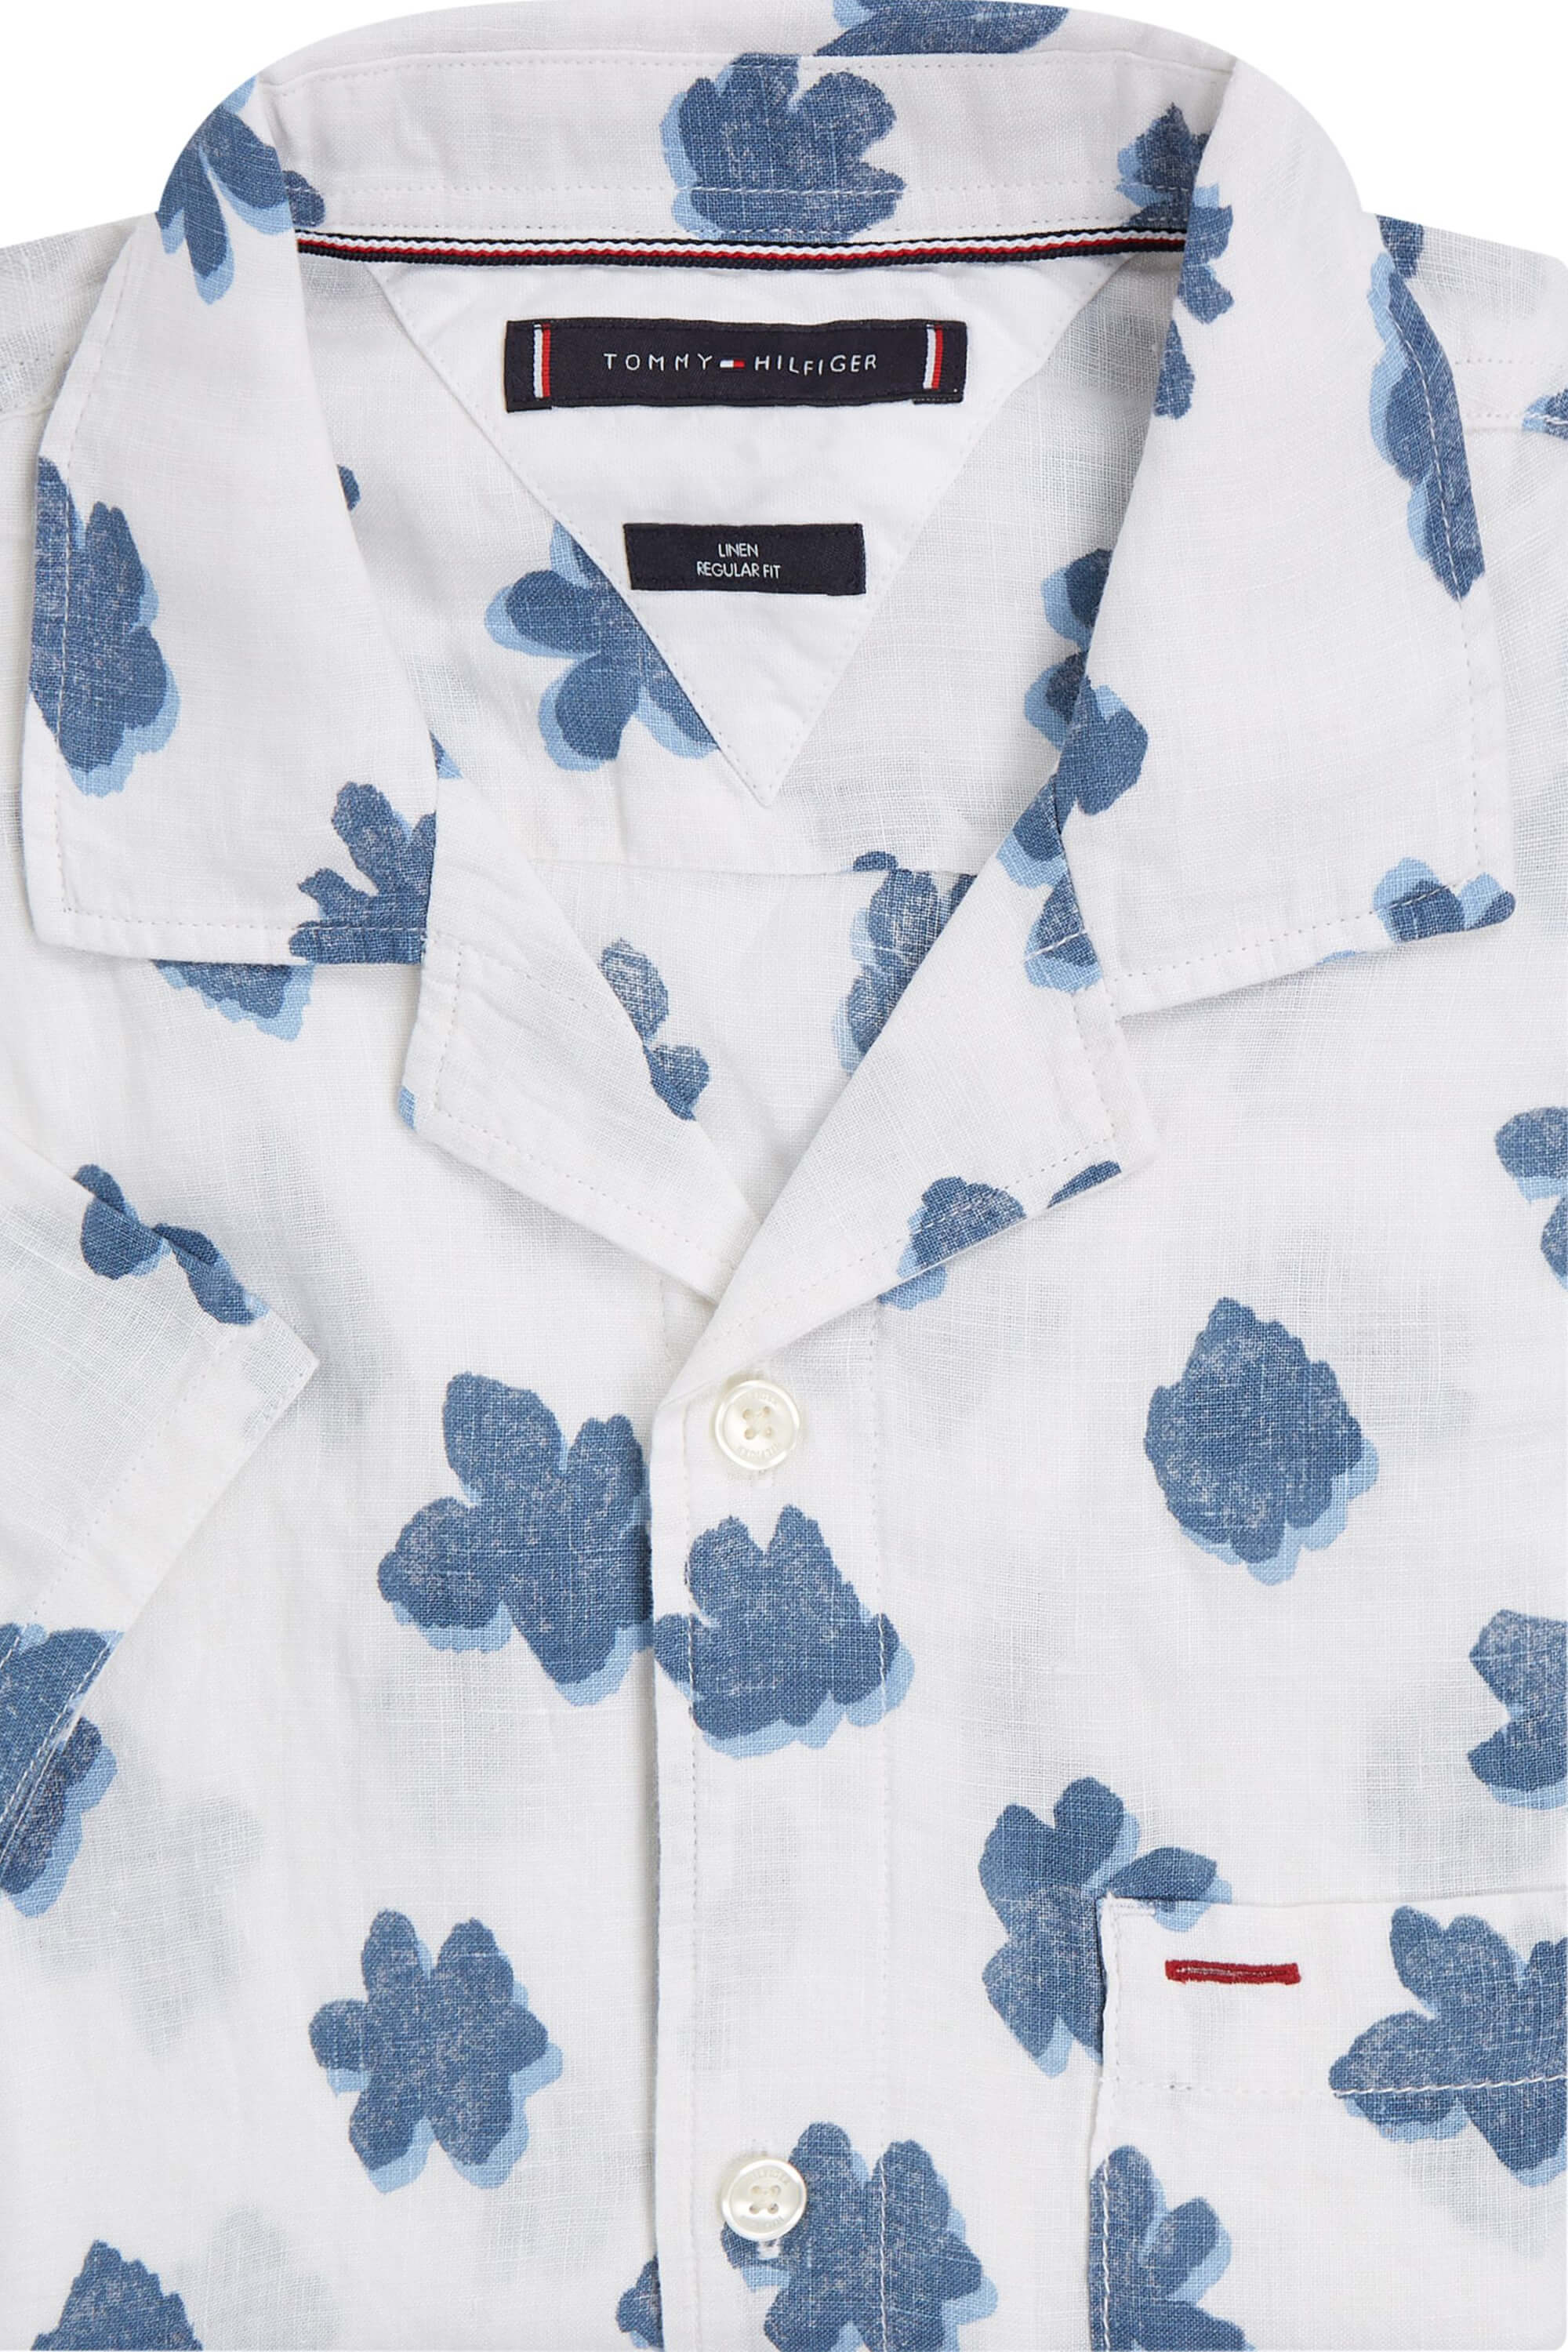 Tommy Hilfiger Mono Flower Shirt White